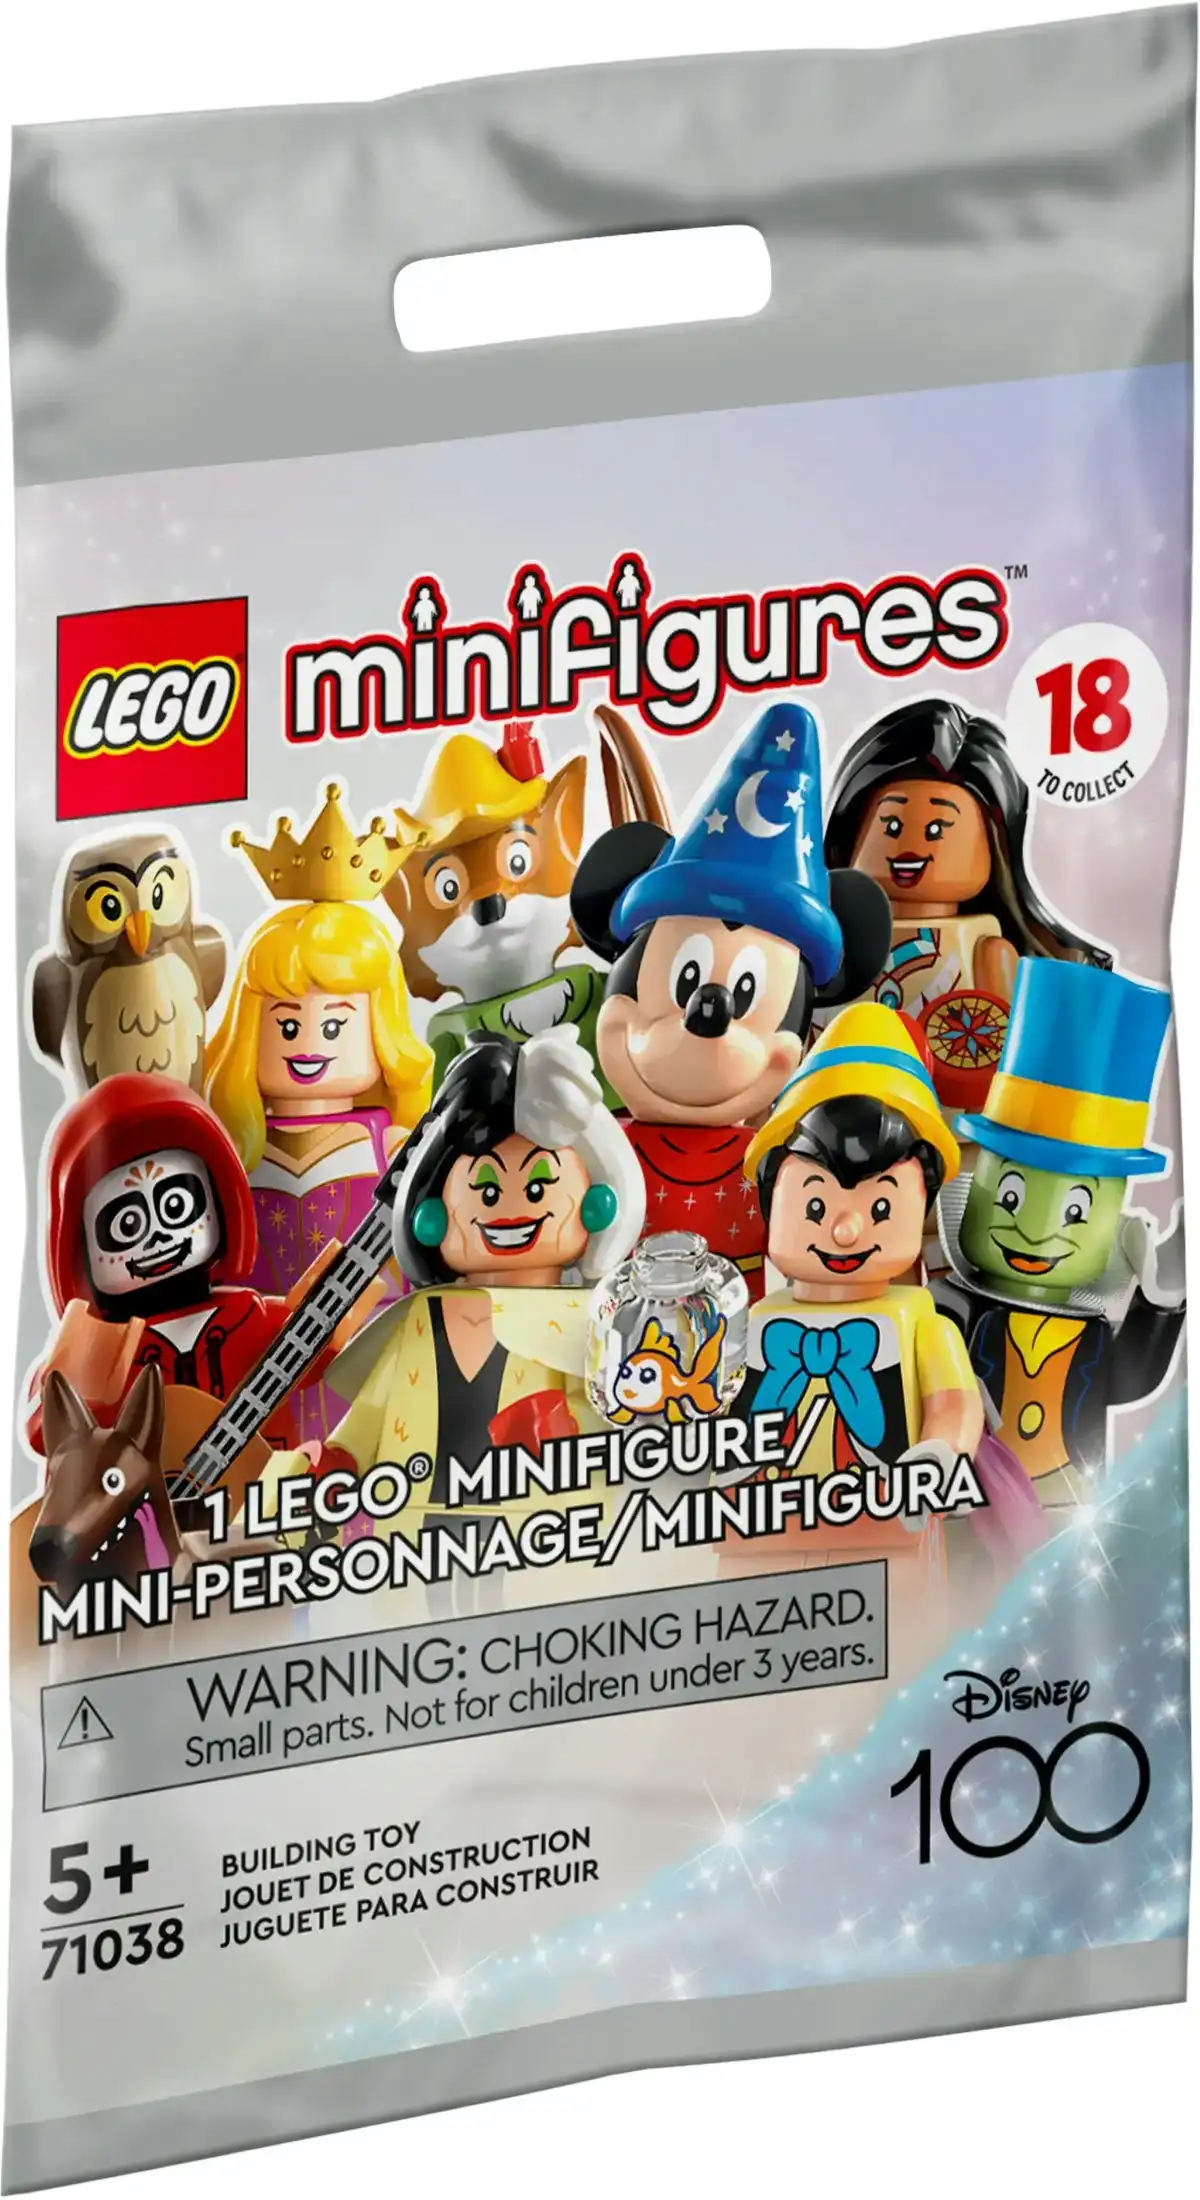 LEGO 71038 Minifigures Disney 100 - Minifigures